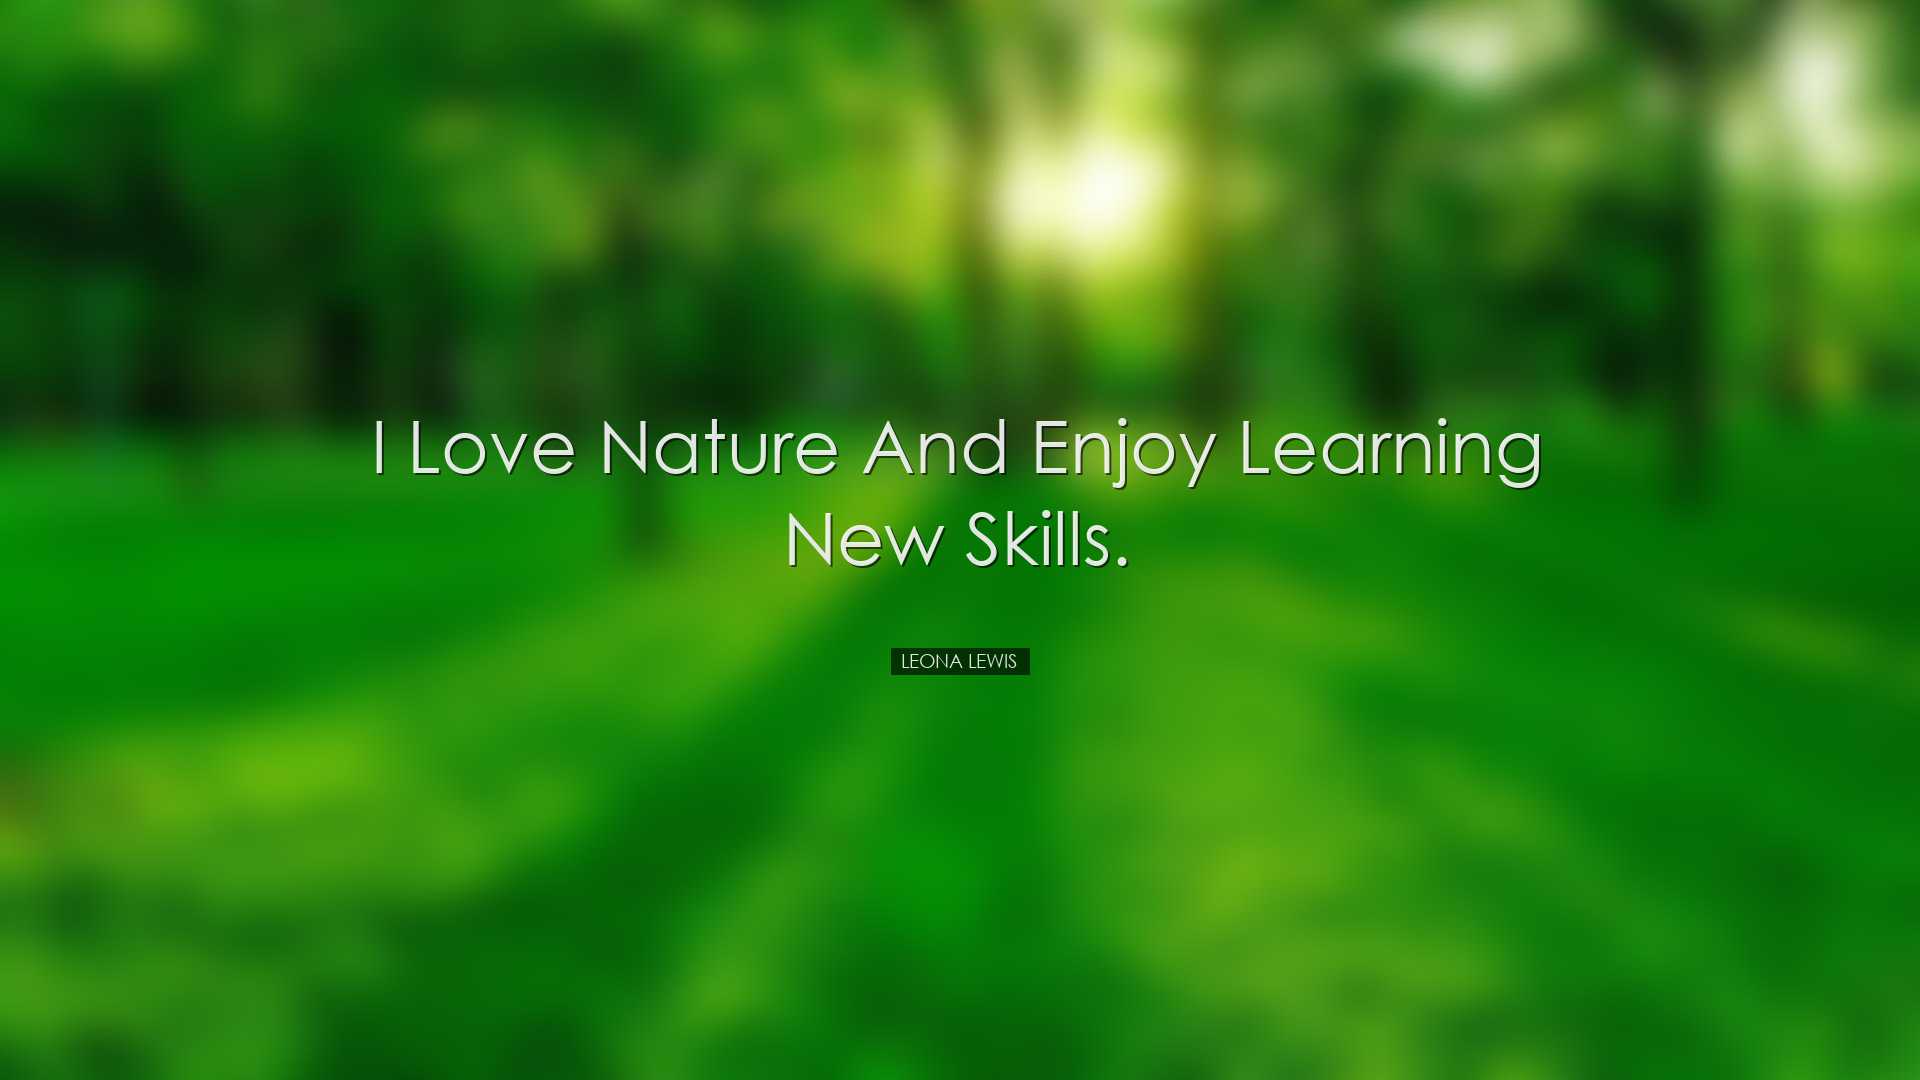 I love nature and enjoy learning new skills. - Leona Lewis